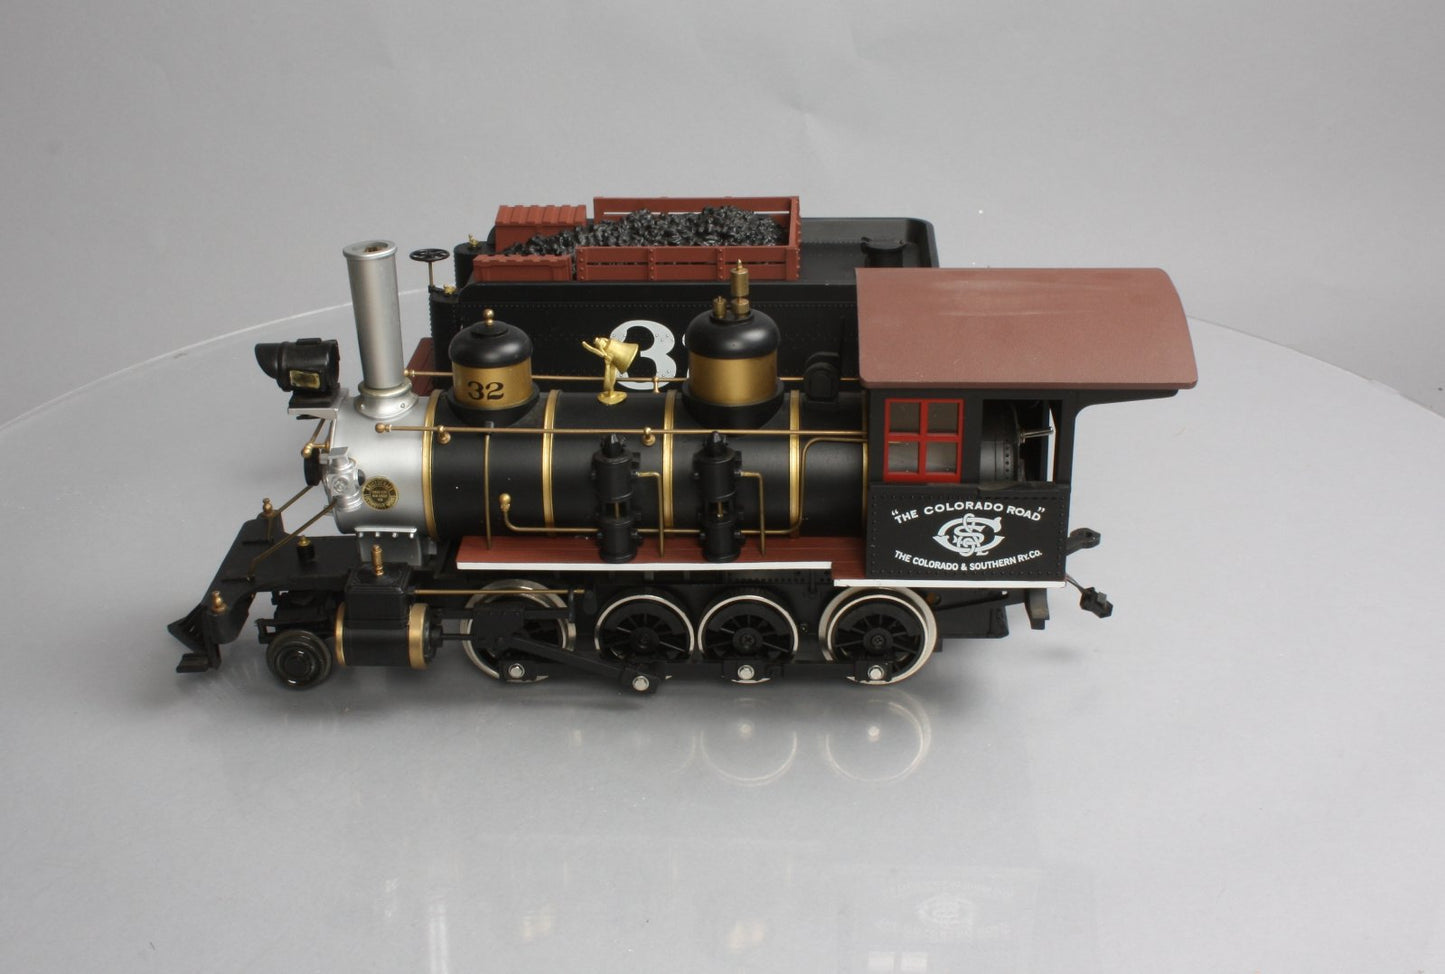 Aristo-Craft 80100 G Colorado Road C-16 2-8-0 Steam Locomotive